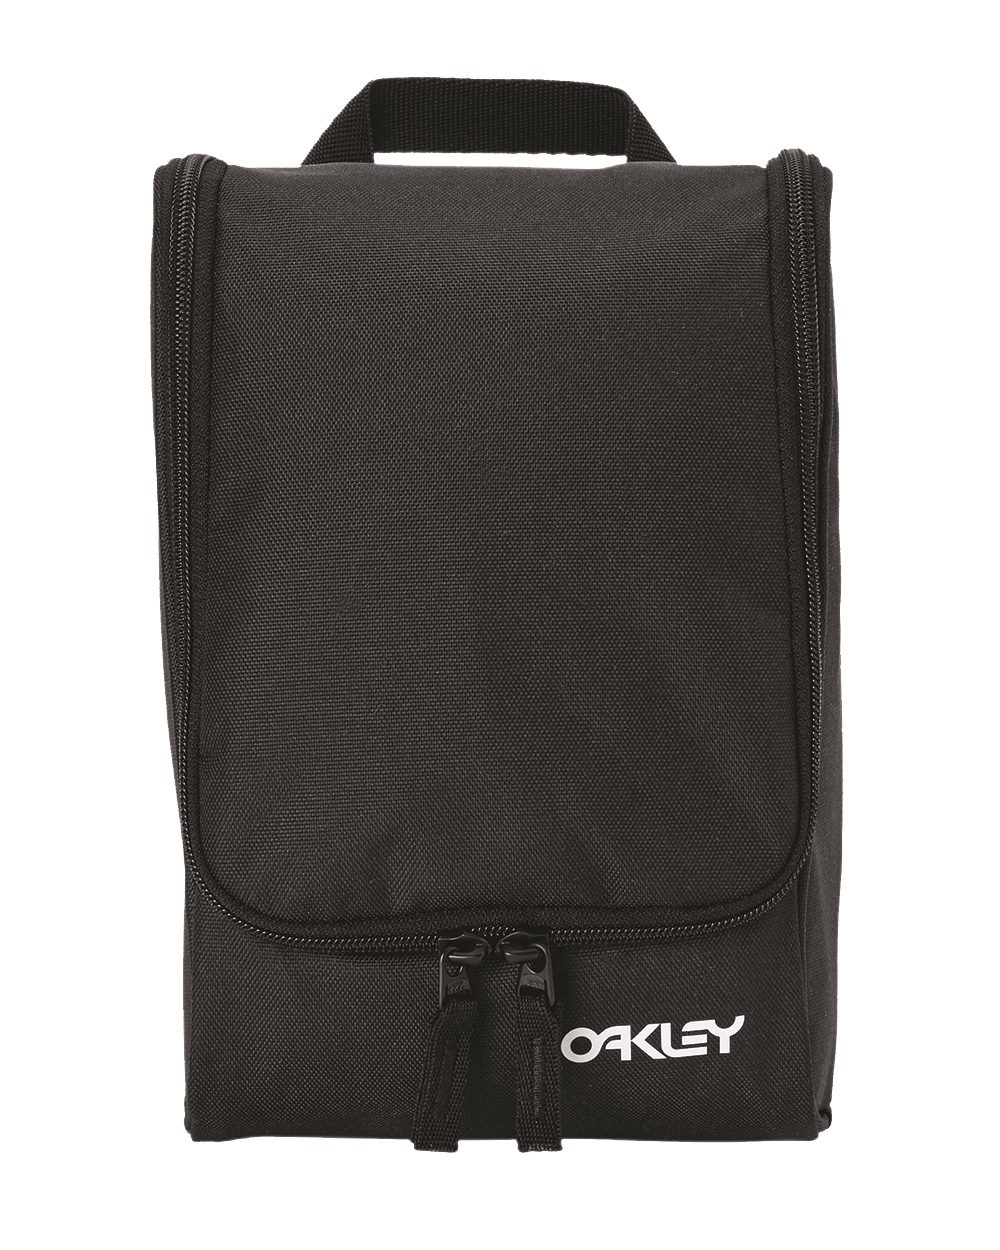 Oakley - F900546 - 5L Travel Pouch